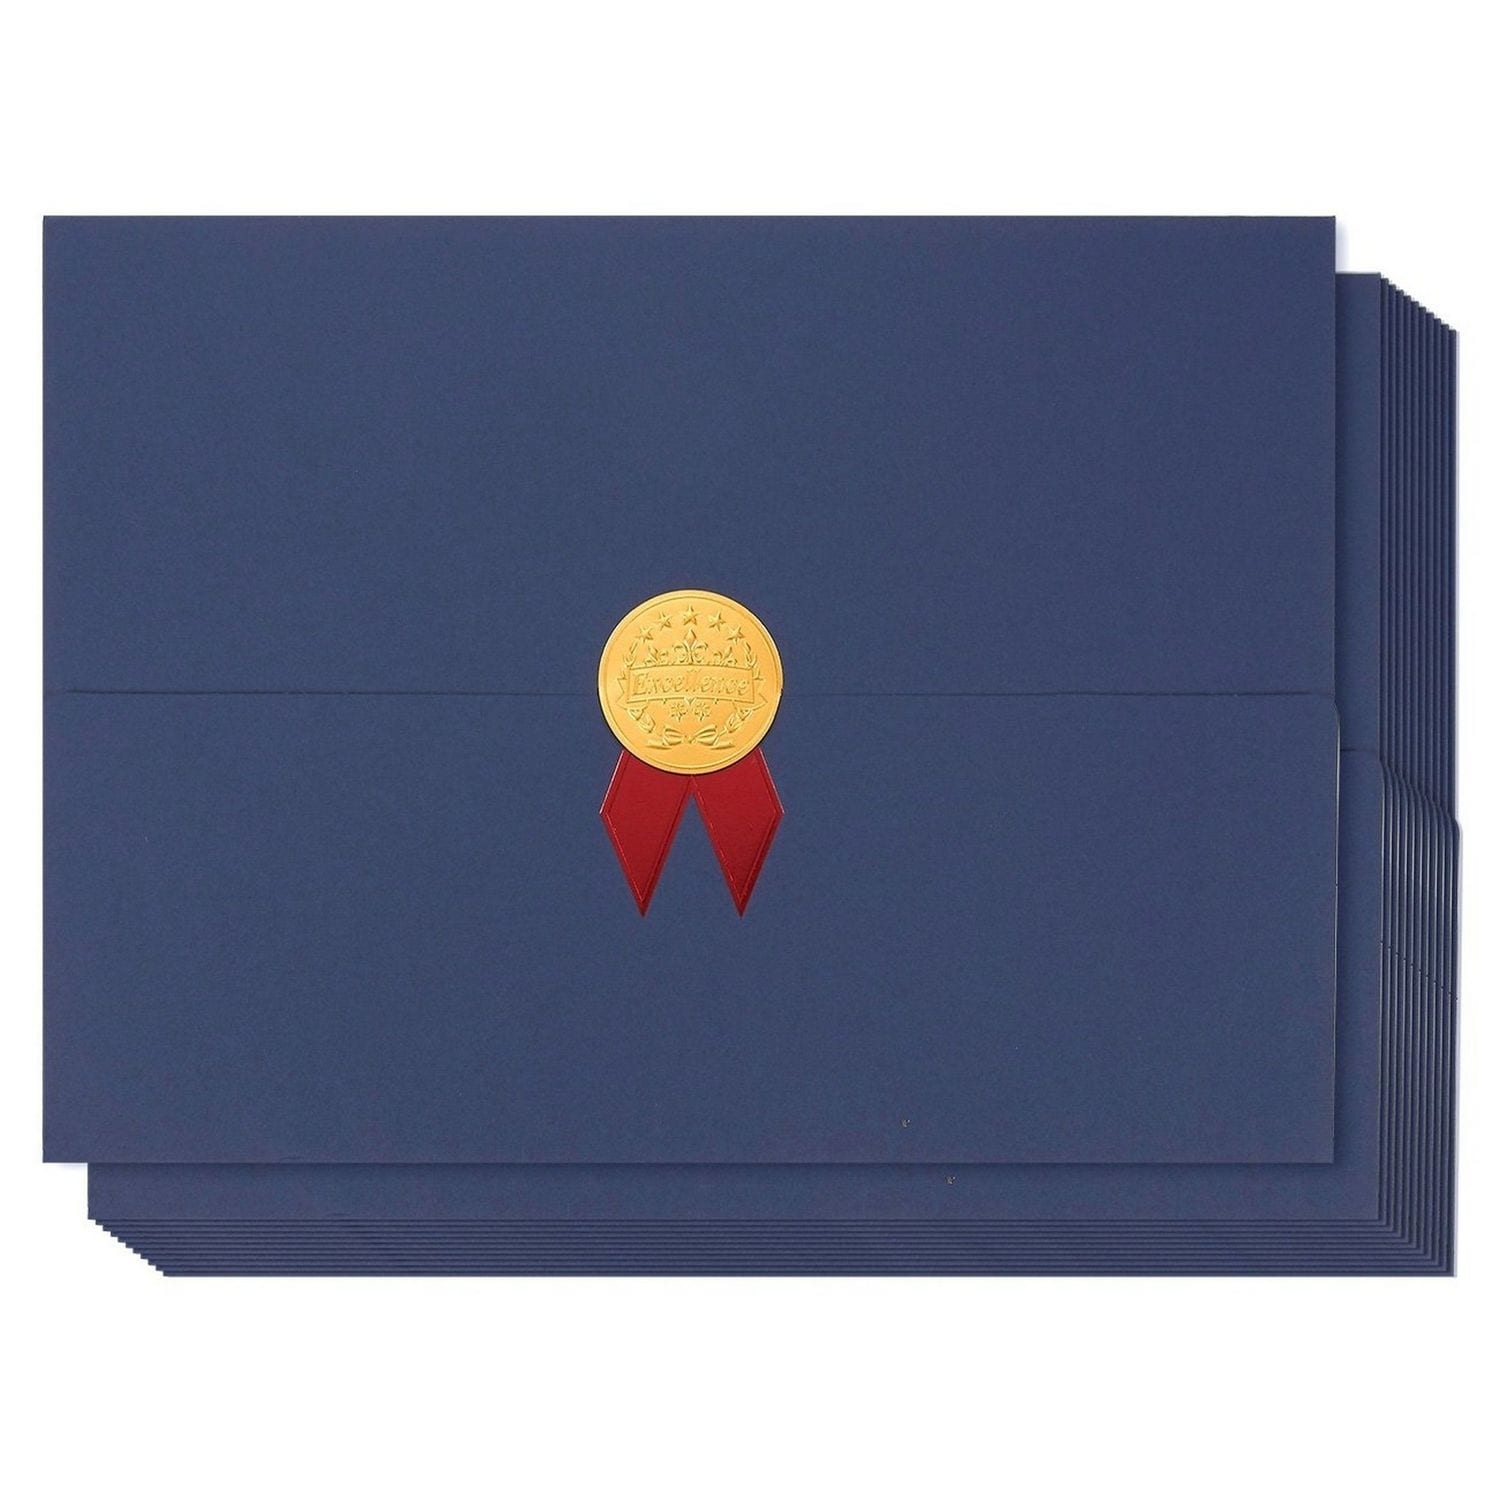 Award Certificates (12 pack)